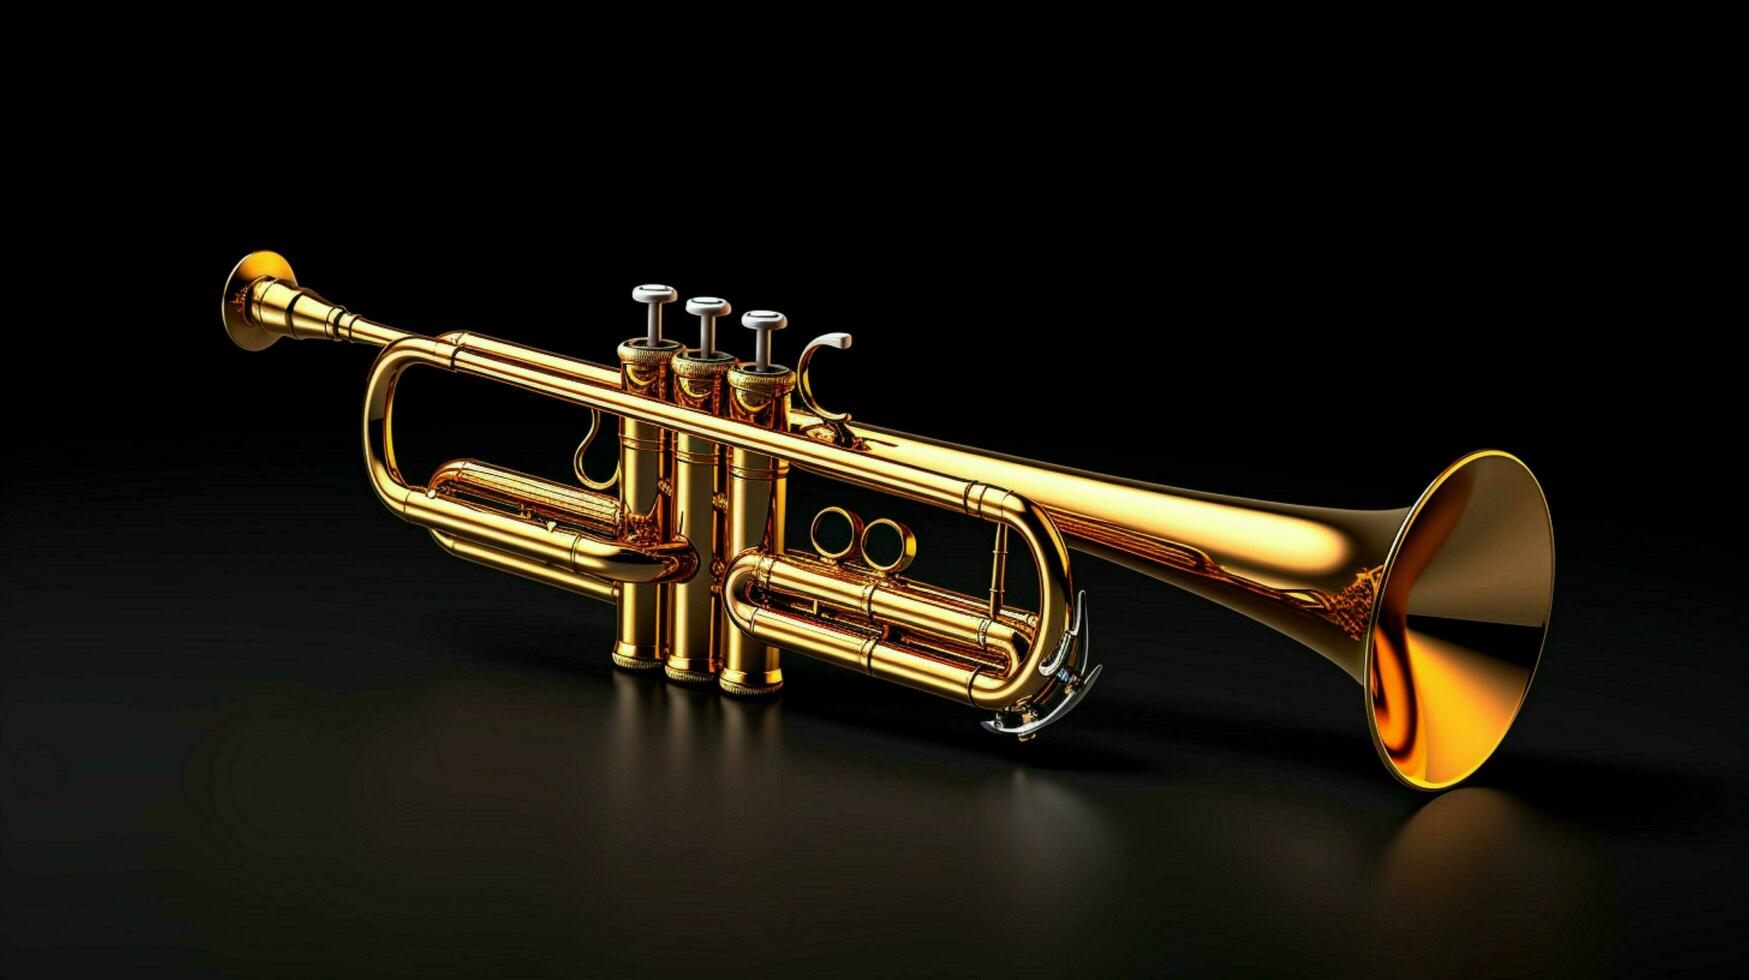 brillant laiton trompette d'or style instrument photo